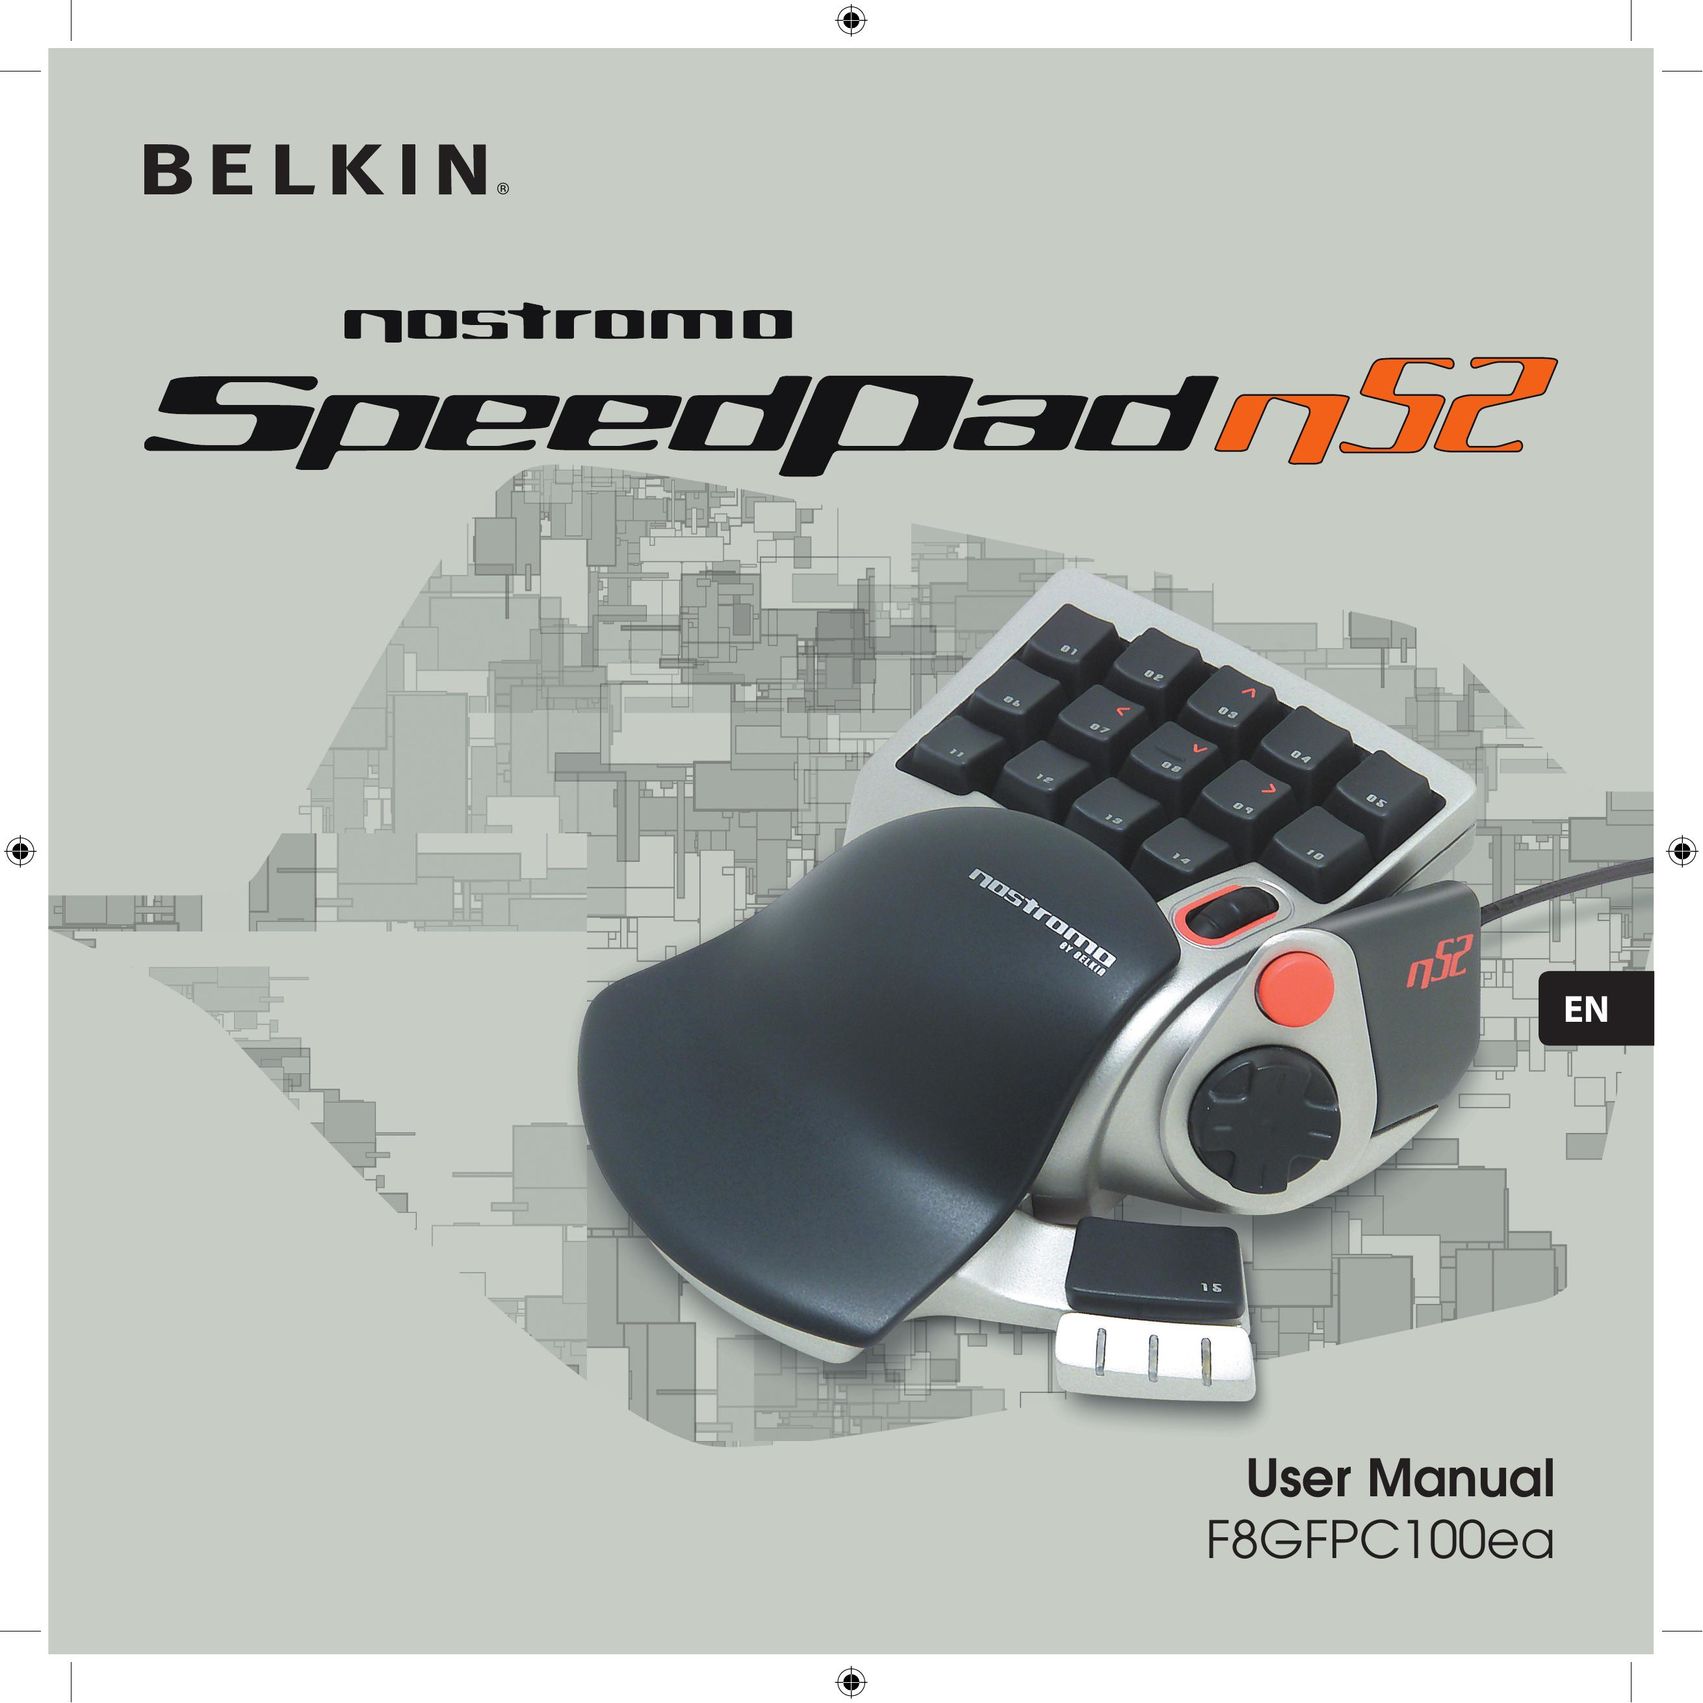 Belkin F8GFPC100ea Video Game Controller User Manual